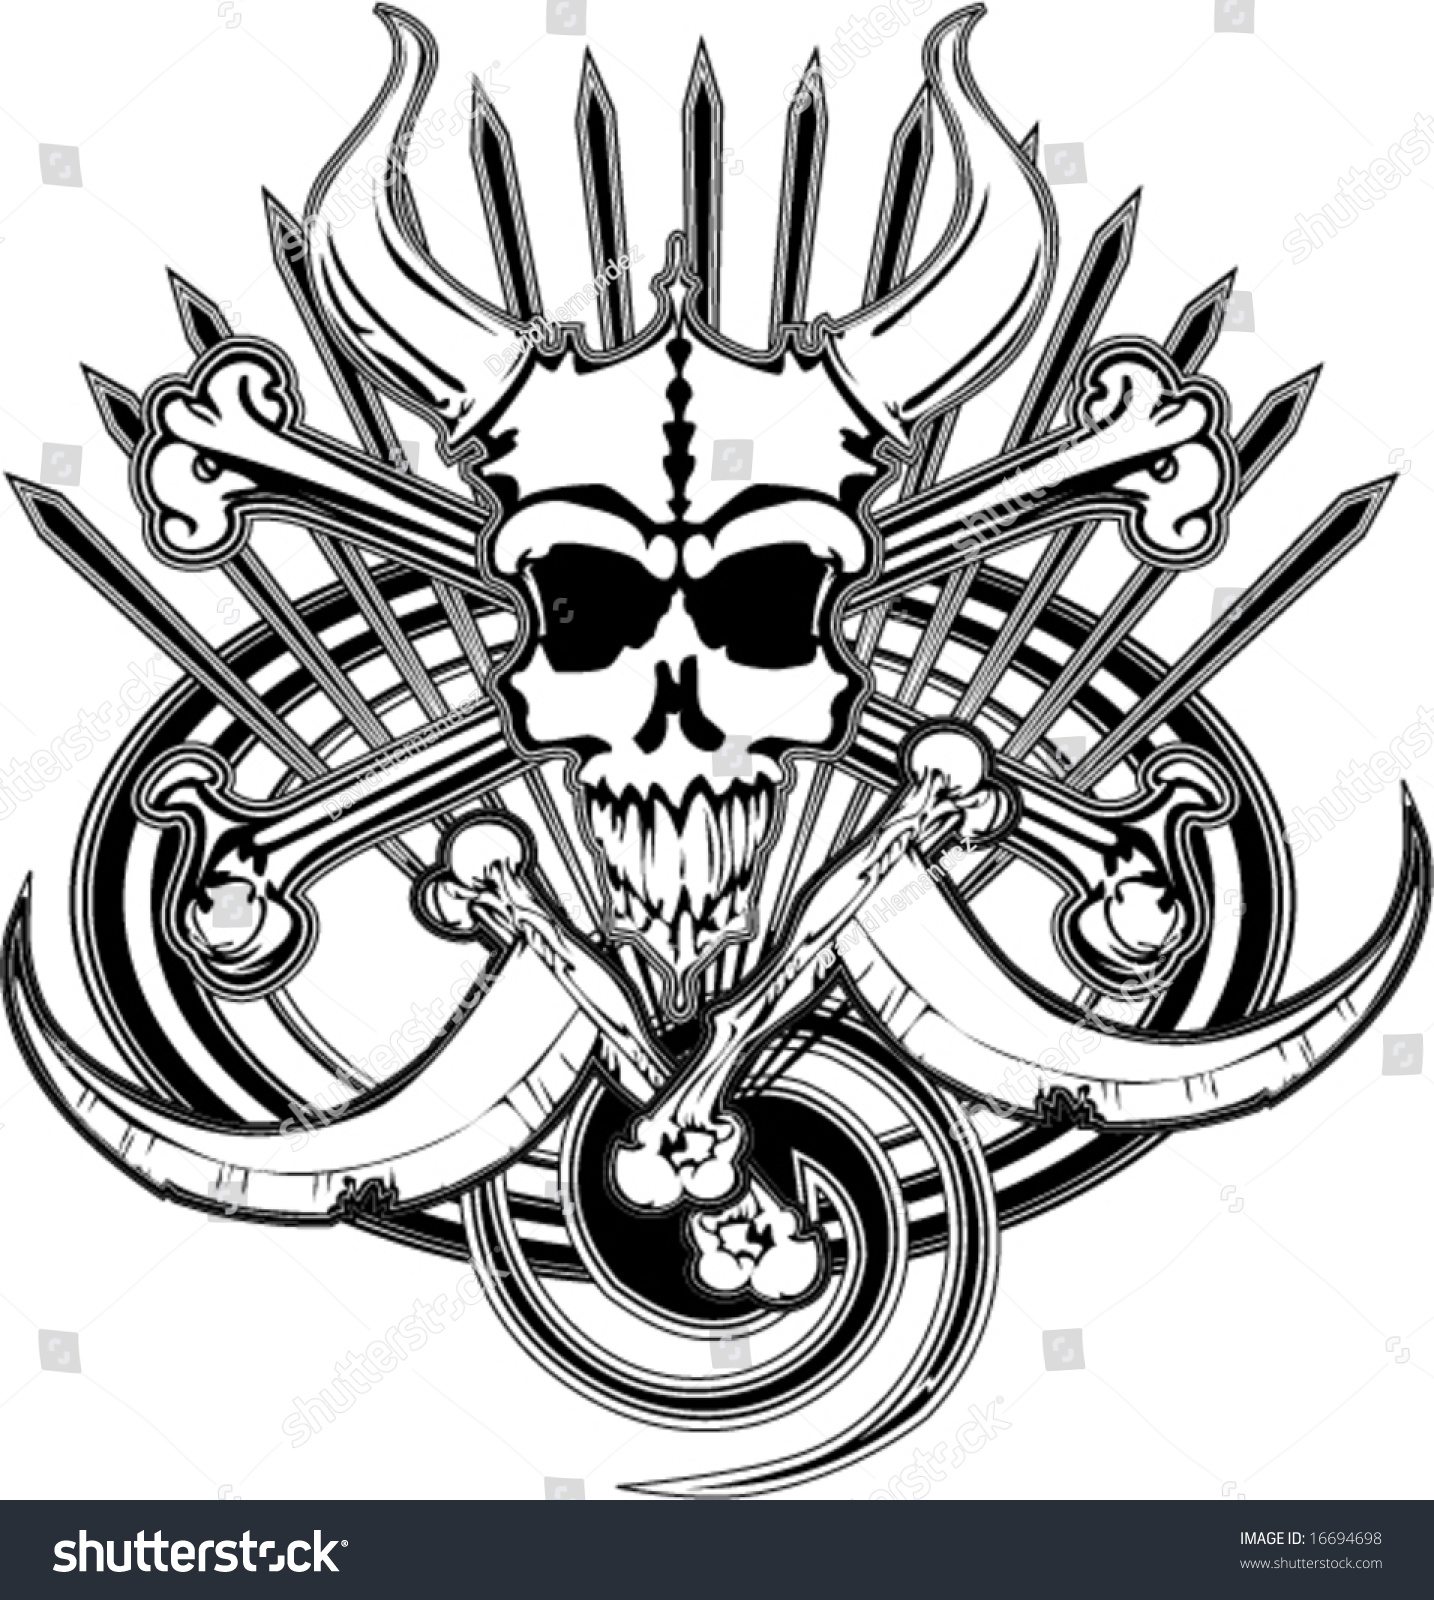 Logo Beast Pirate Skull Bones Death Stock Vector 16694698 - Shutterstock